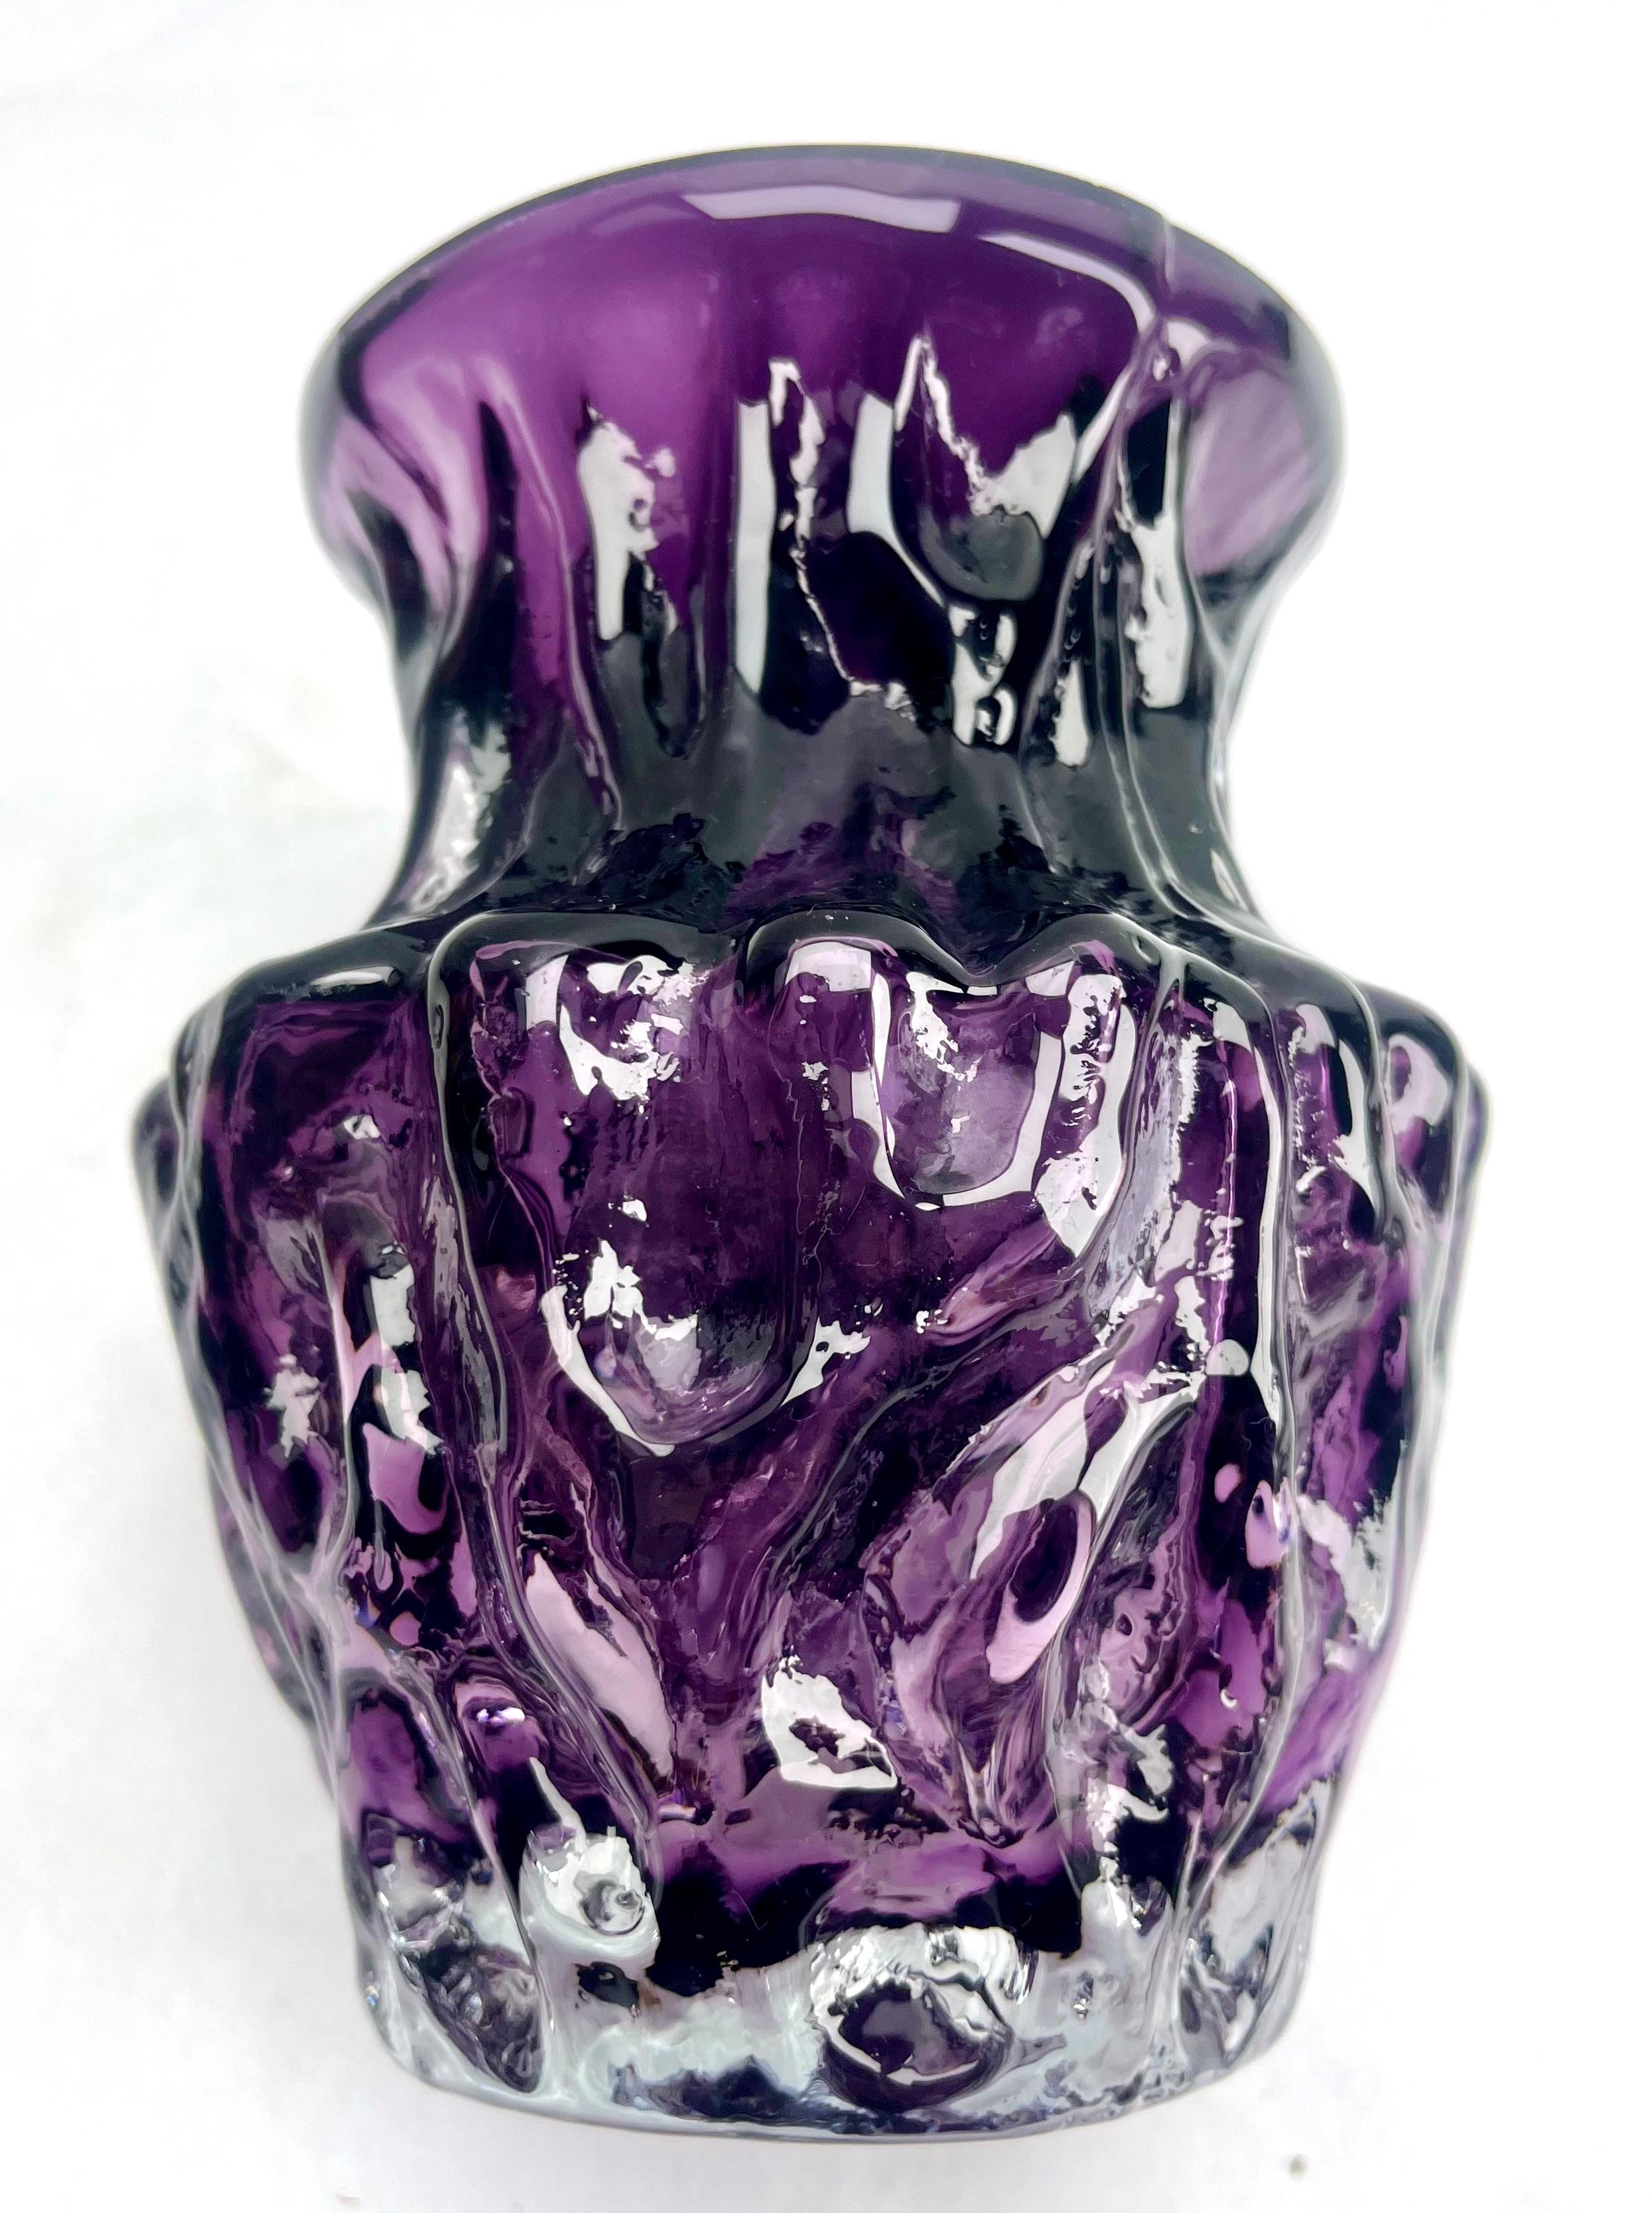 Ingrid Glas ‘Germany’ Bark Vase in Purple, 1970s For Sale 2